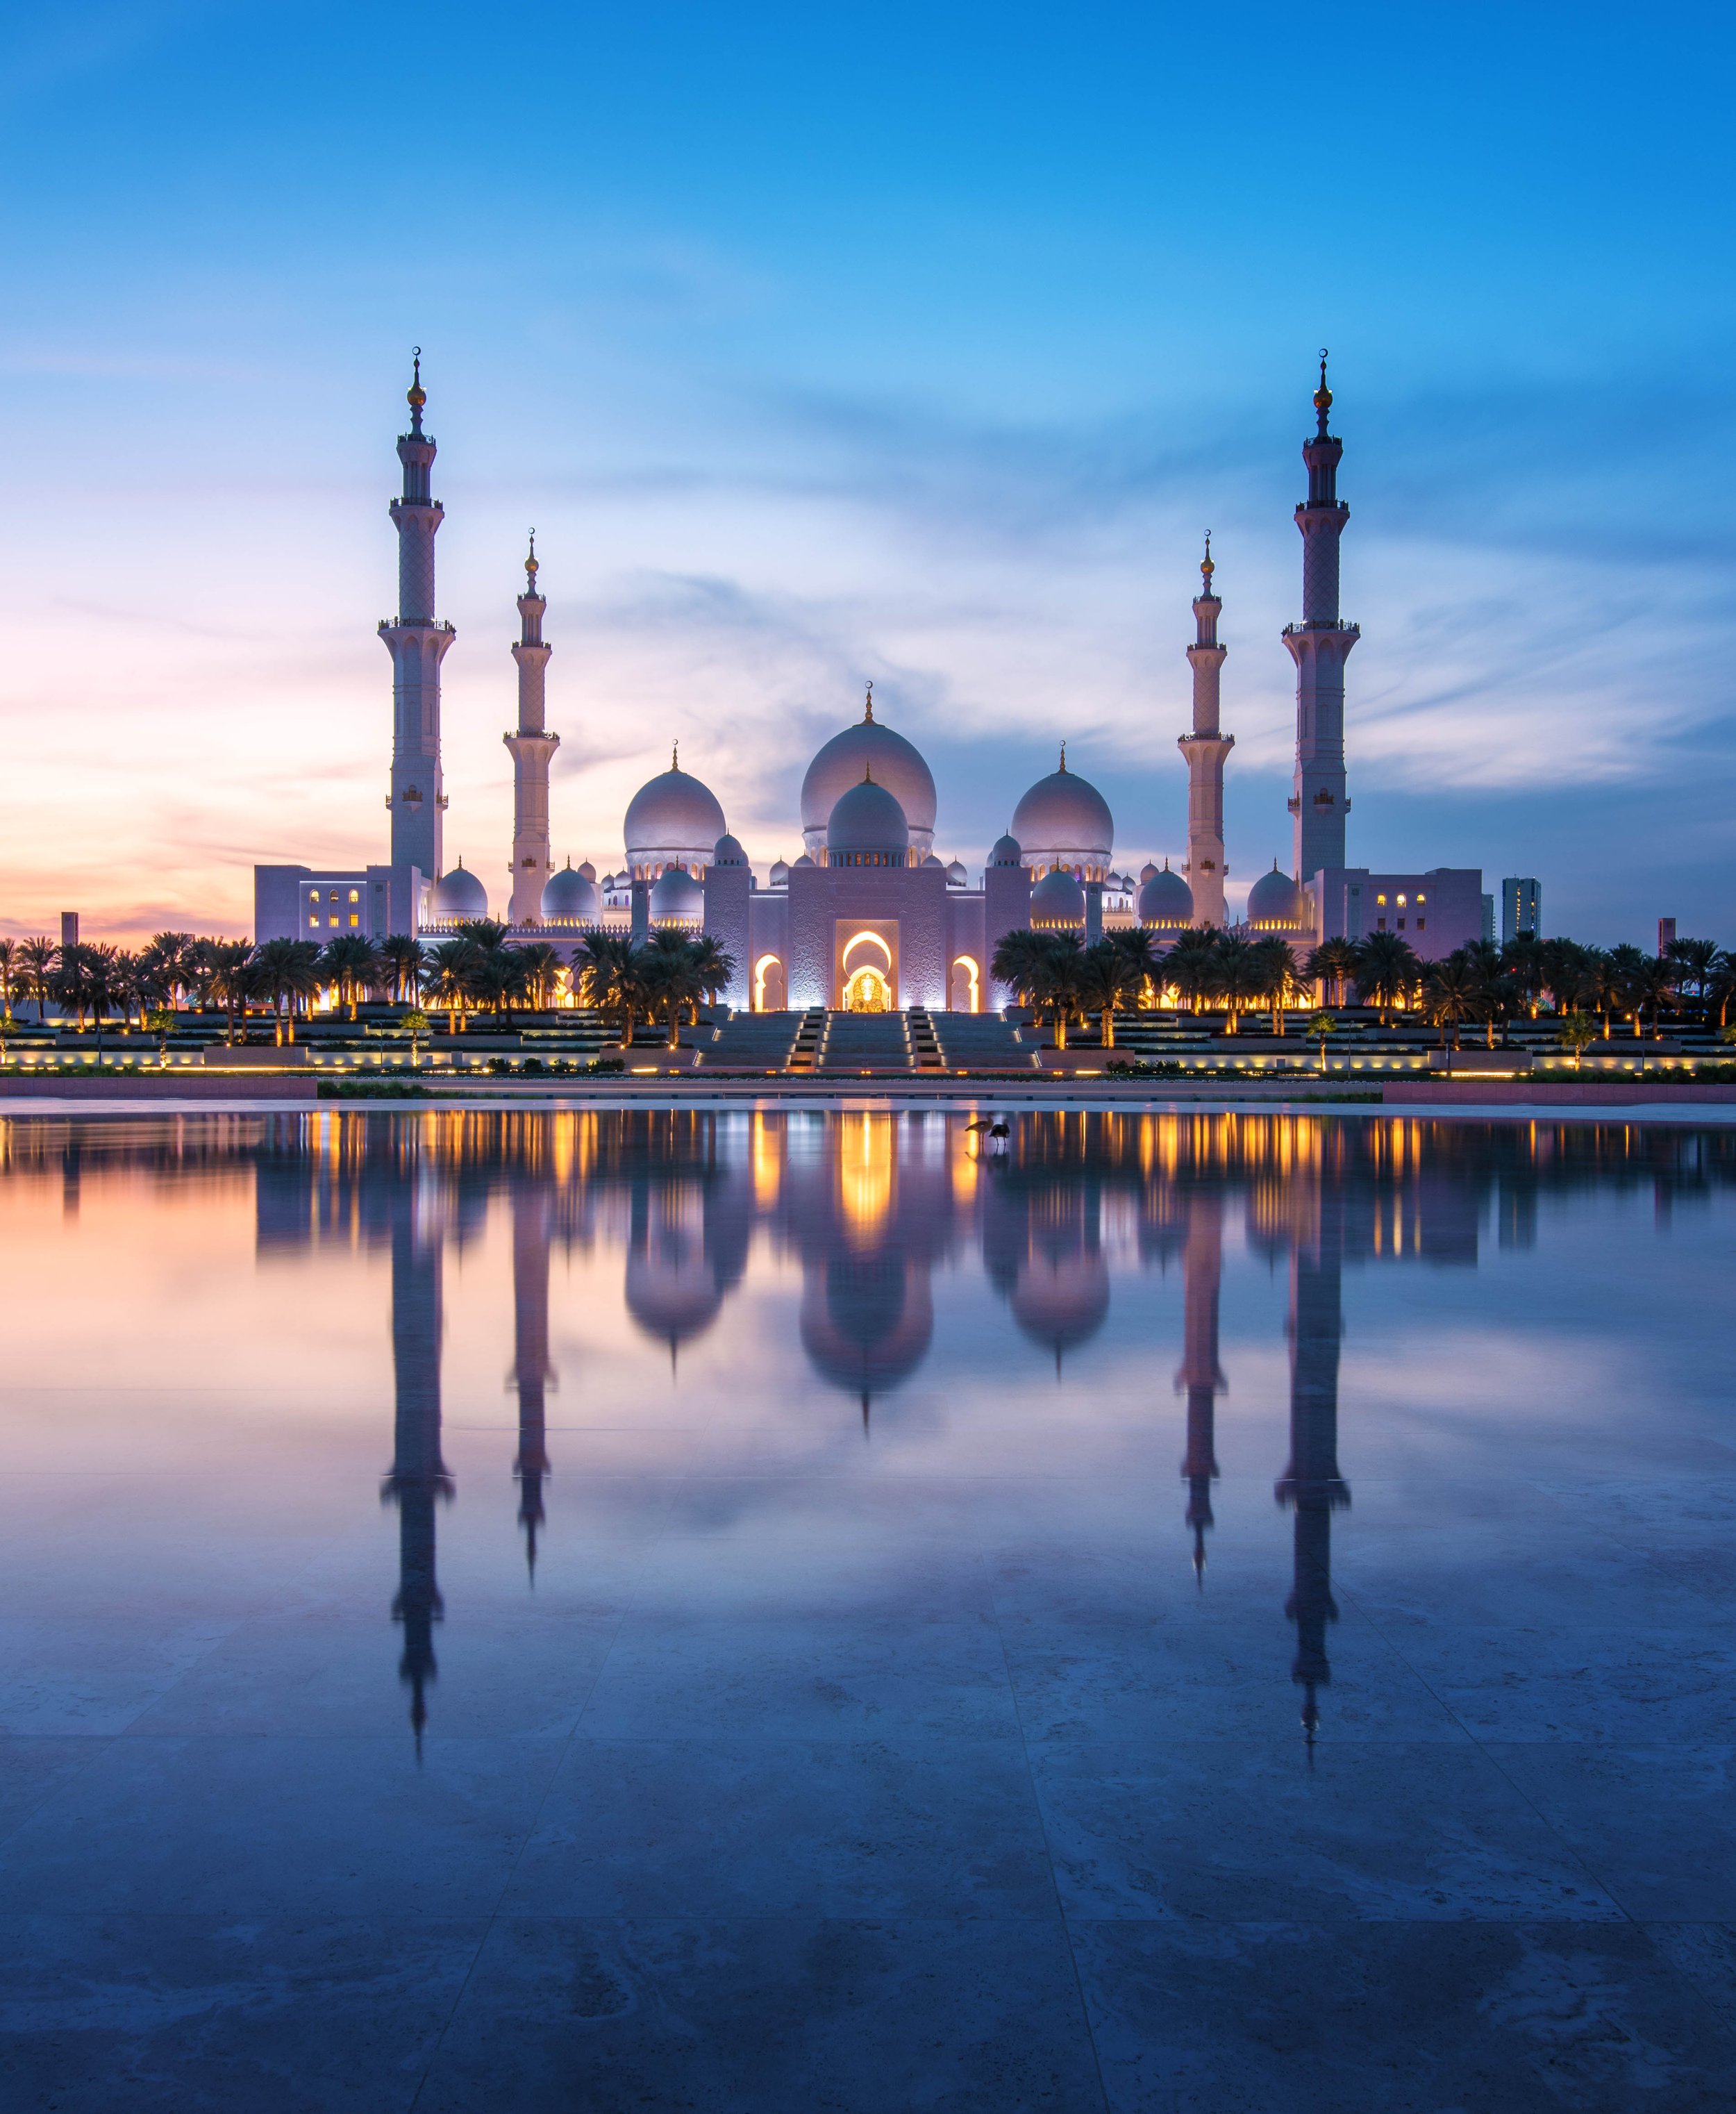 Sheikh Zayed Grand mosque of Abu Dhabi